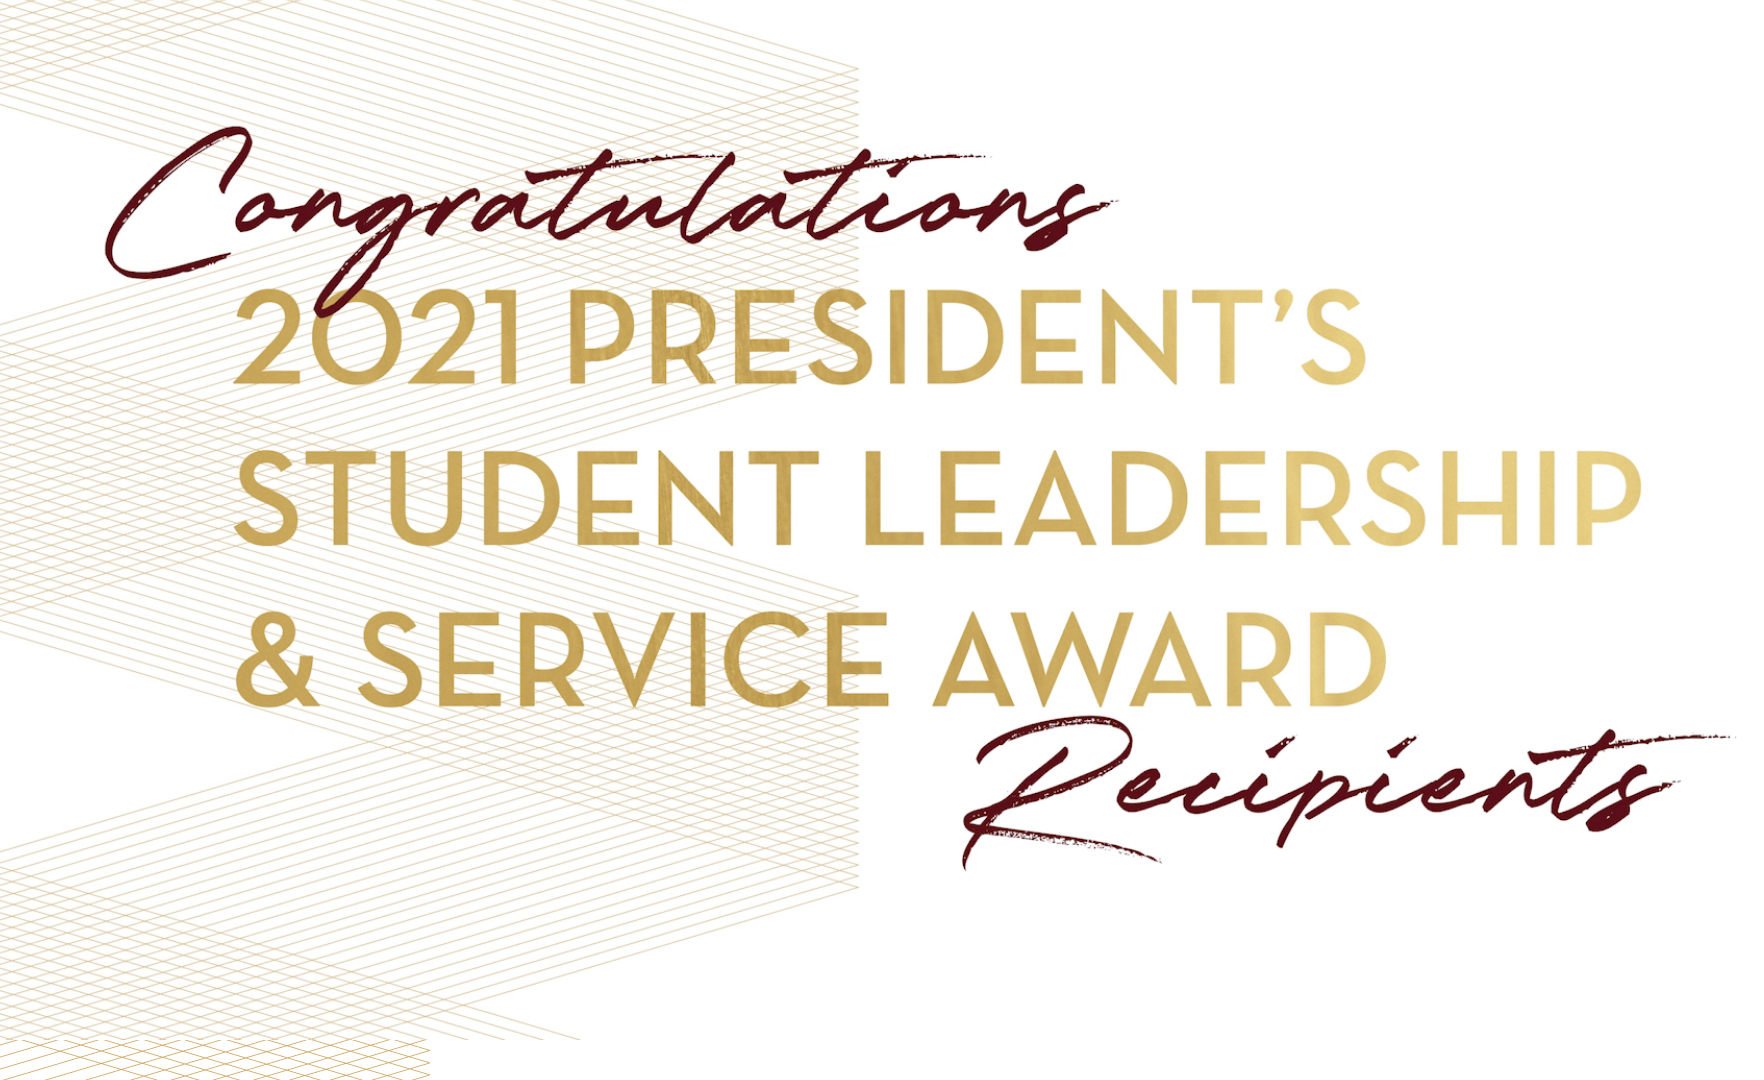 President's Student Leadership & Service Awards